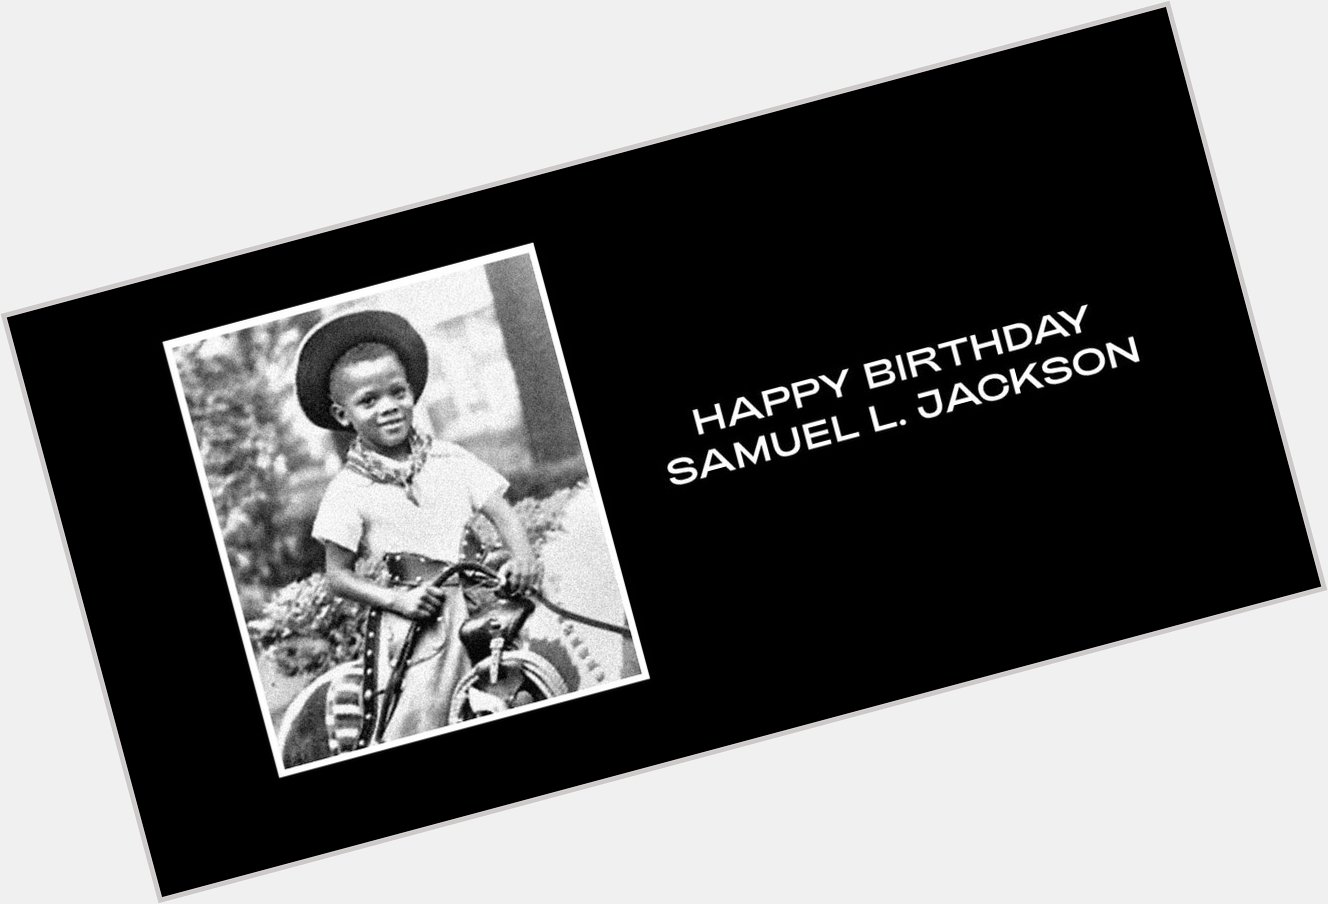  Happy Birthday Samuel L. Jackson & Jordin Sparks  